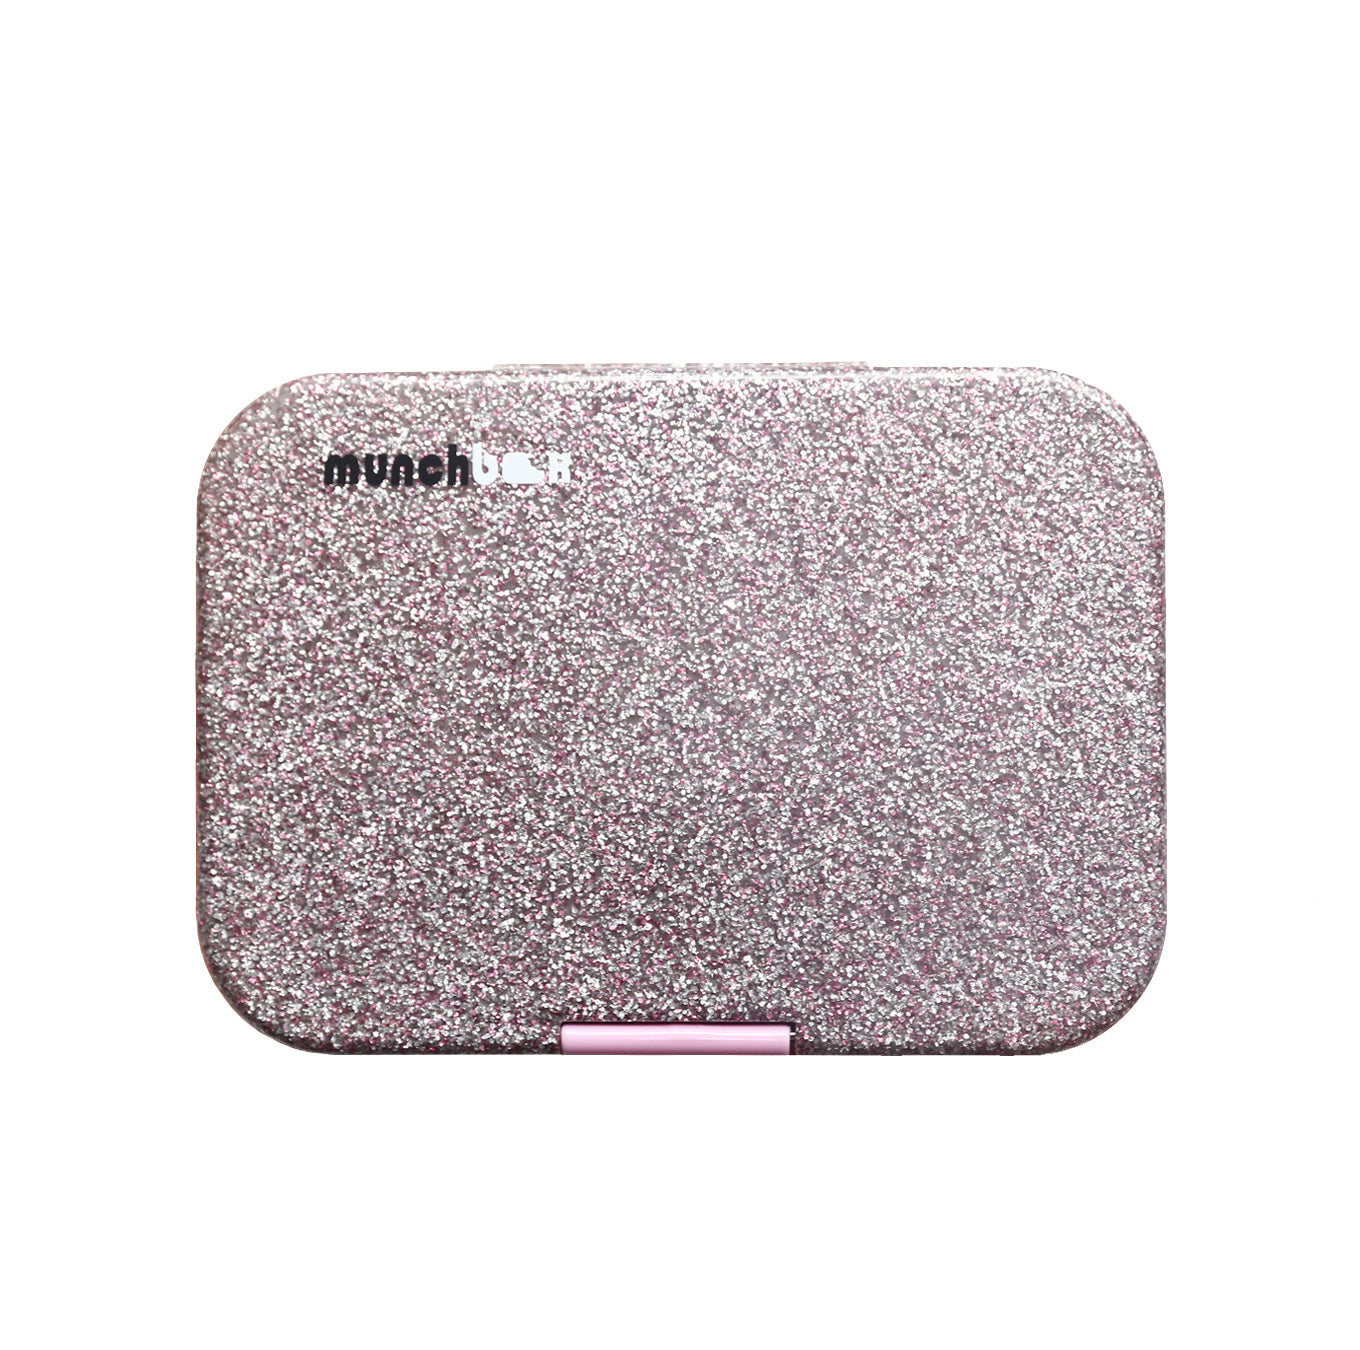 Munchbox Maxi 6 - Sparkle Pink